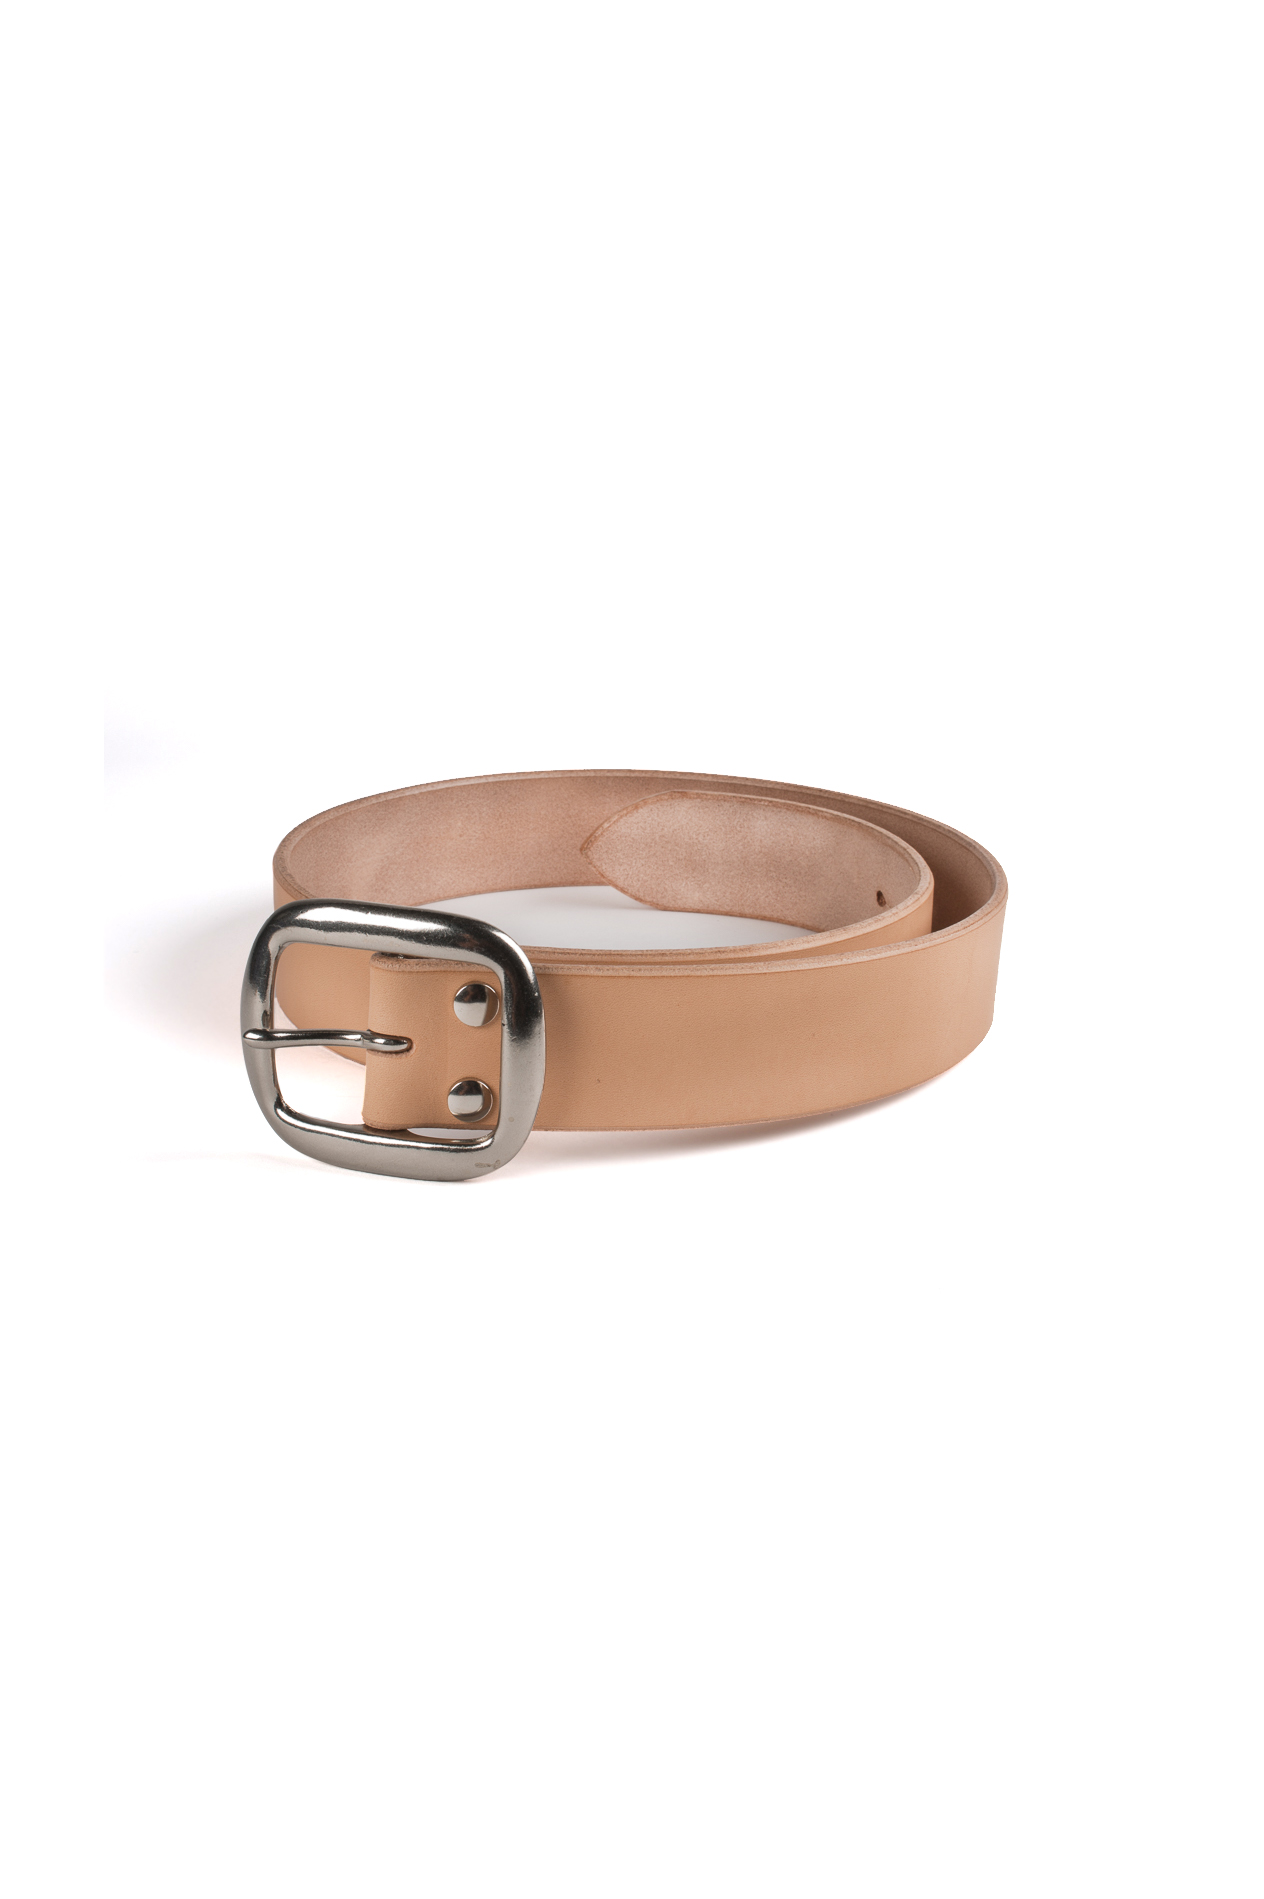 Studio D'Artisan Cowhide Leather Belt - Tan - Image 0